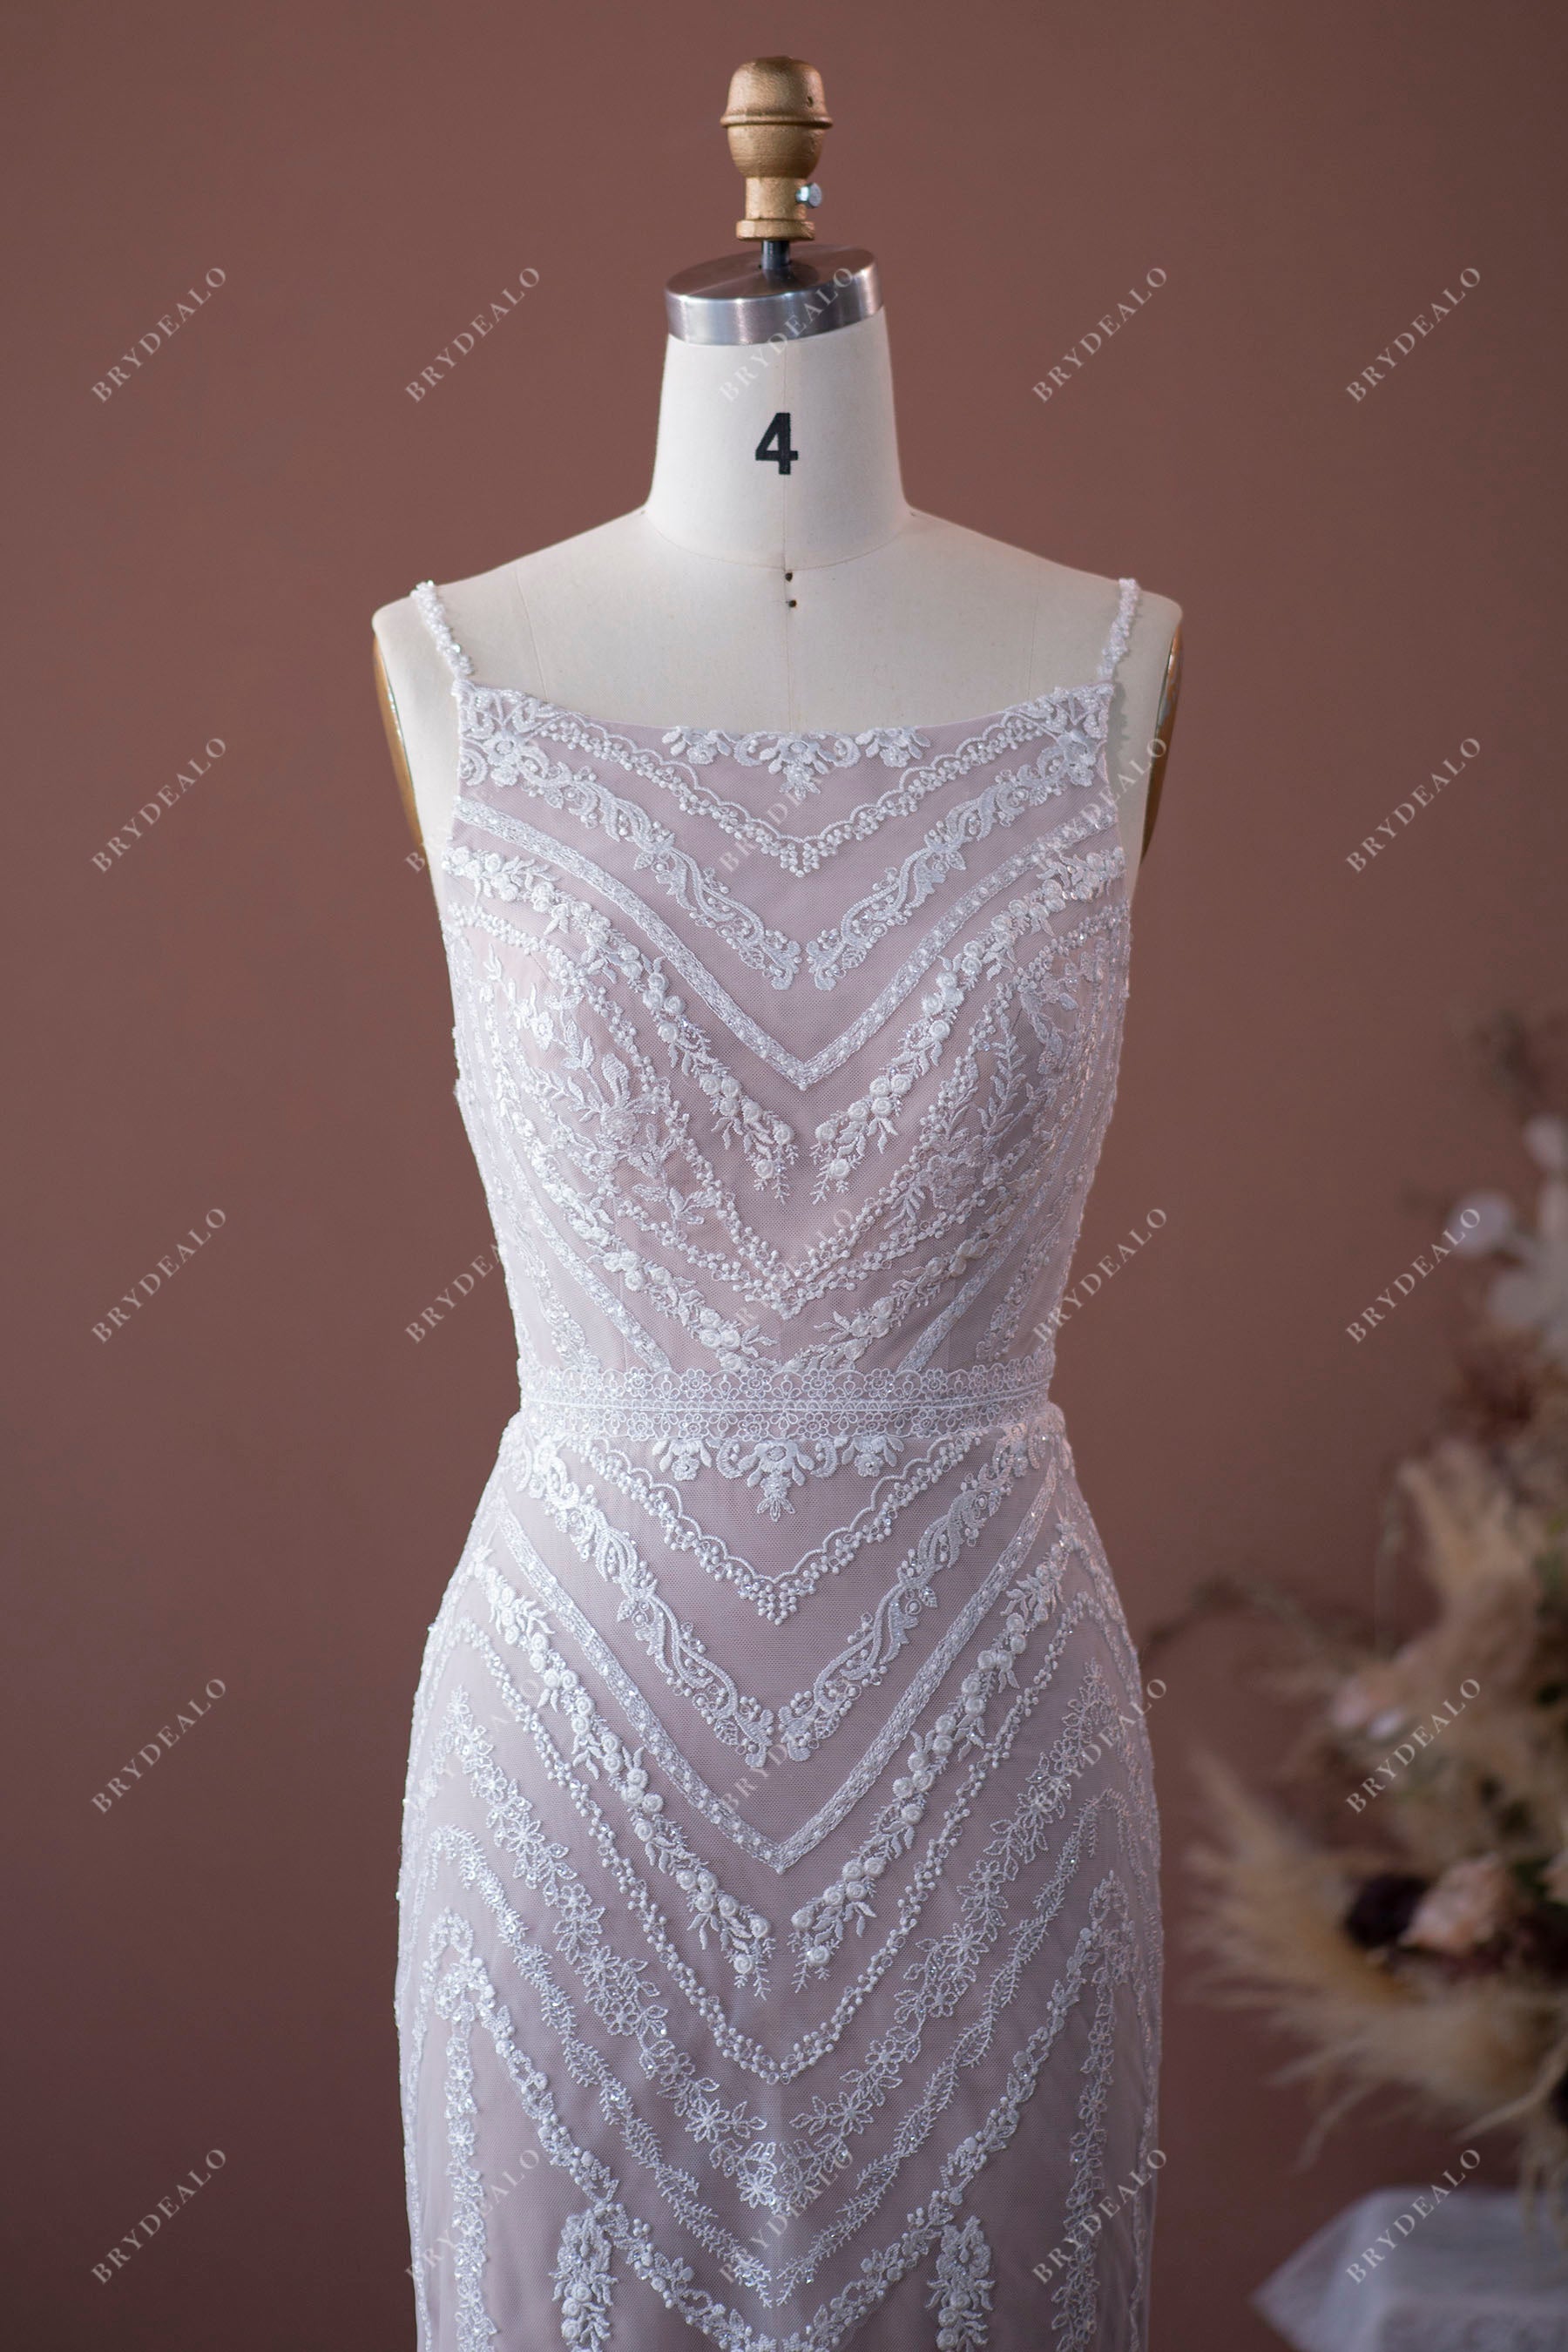 symmetrical leaf patterned lace bridal dress